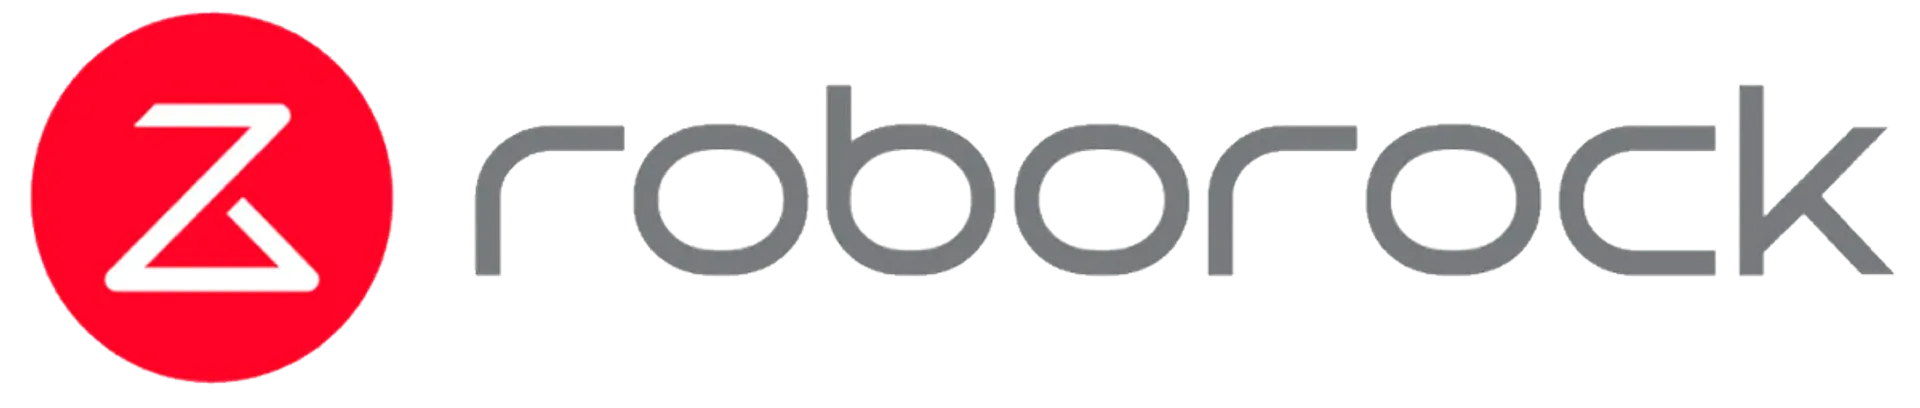 ROBOROCK logo